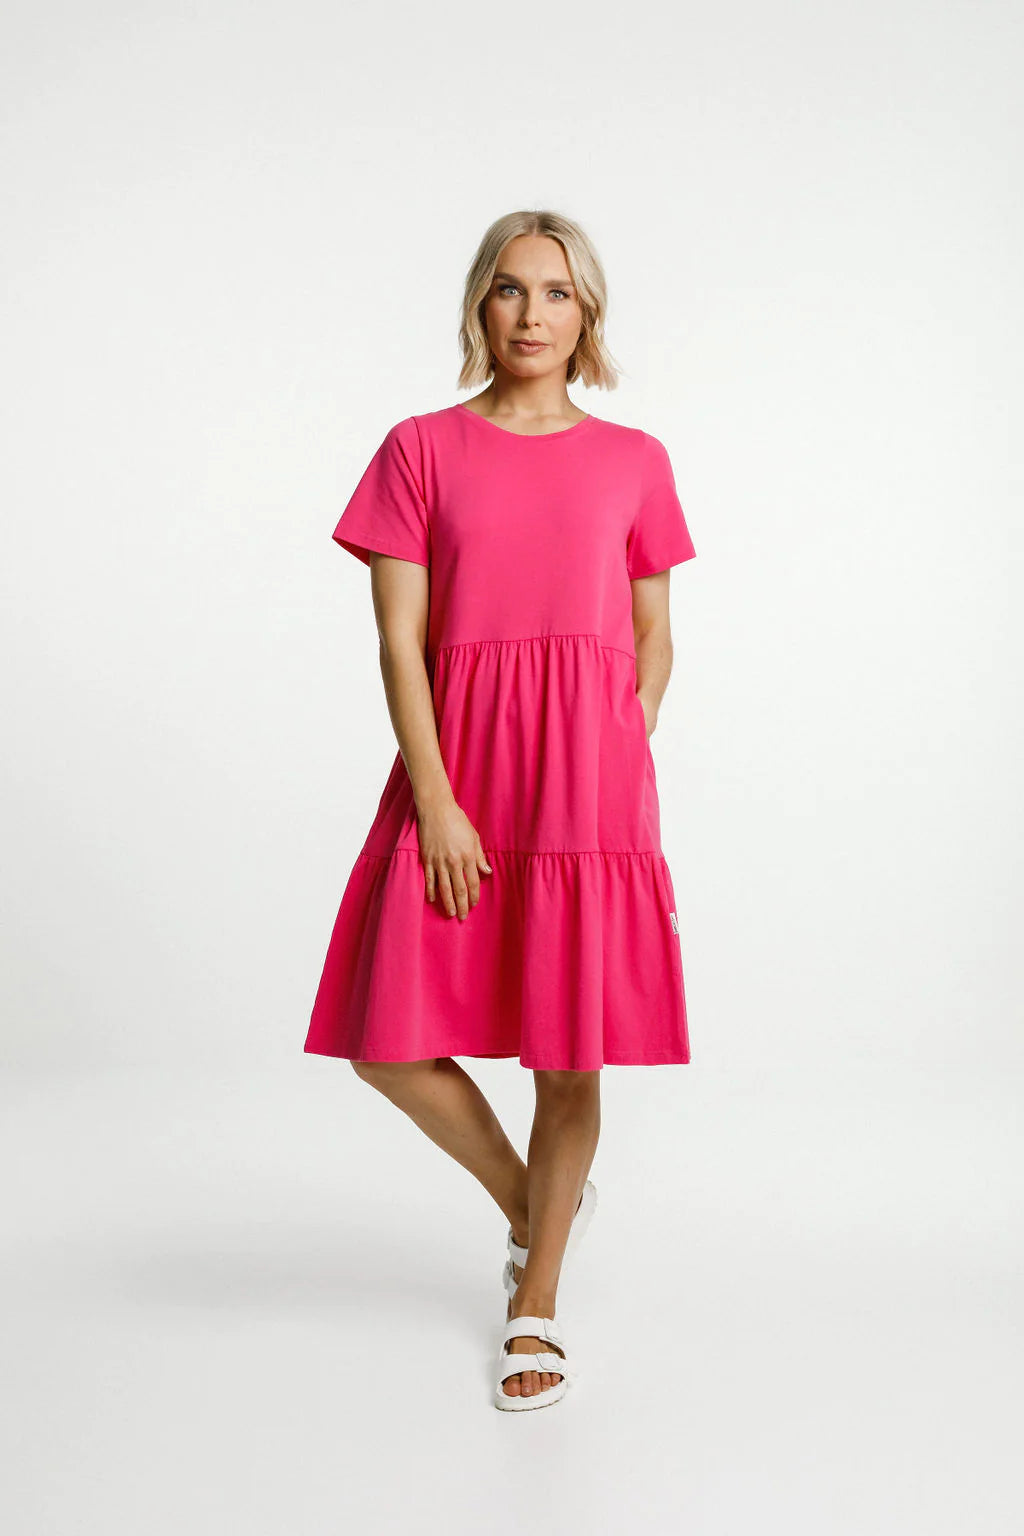 Homelee Kylie Dress - Raspberry Pink